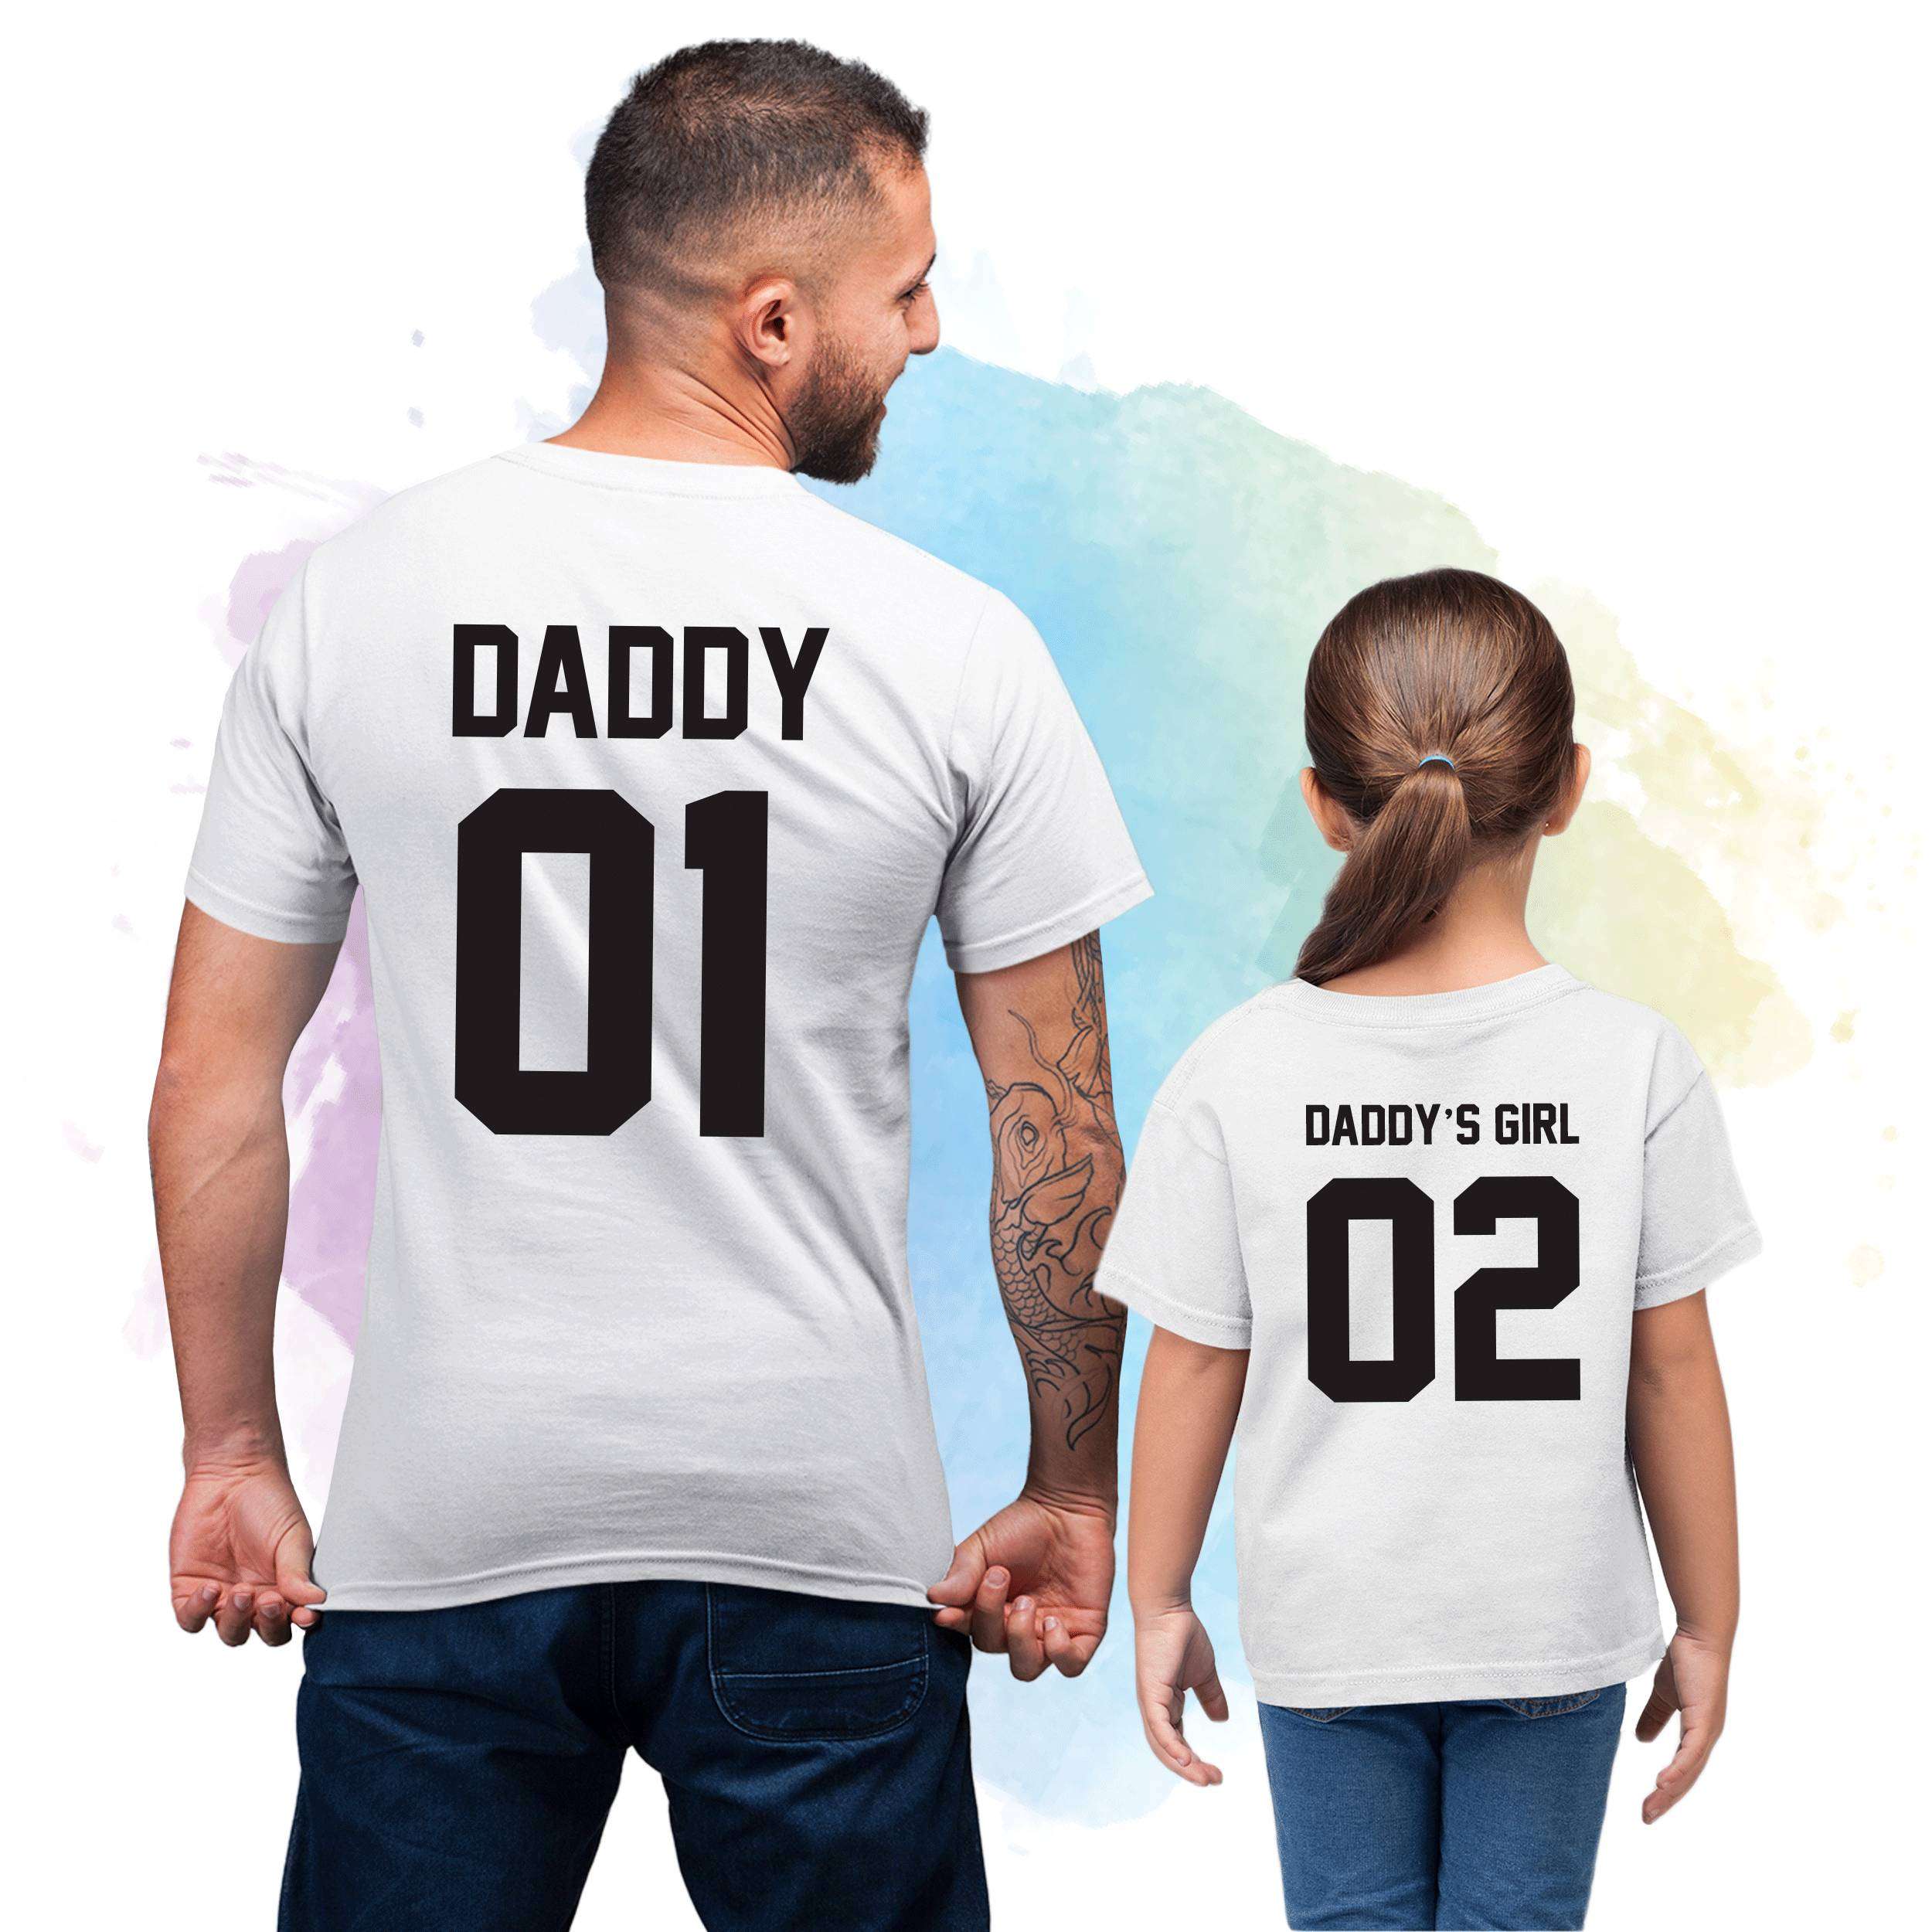 Daddy girls video. Футболка Daddy's girl. Girl dad 3 футболка. Папа и Дочки games футболки. Футболки папы и Дочки точка ру.